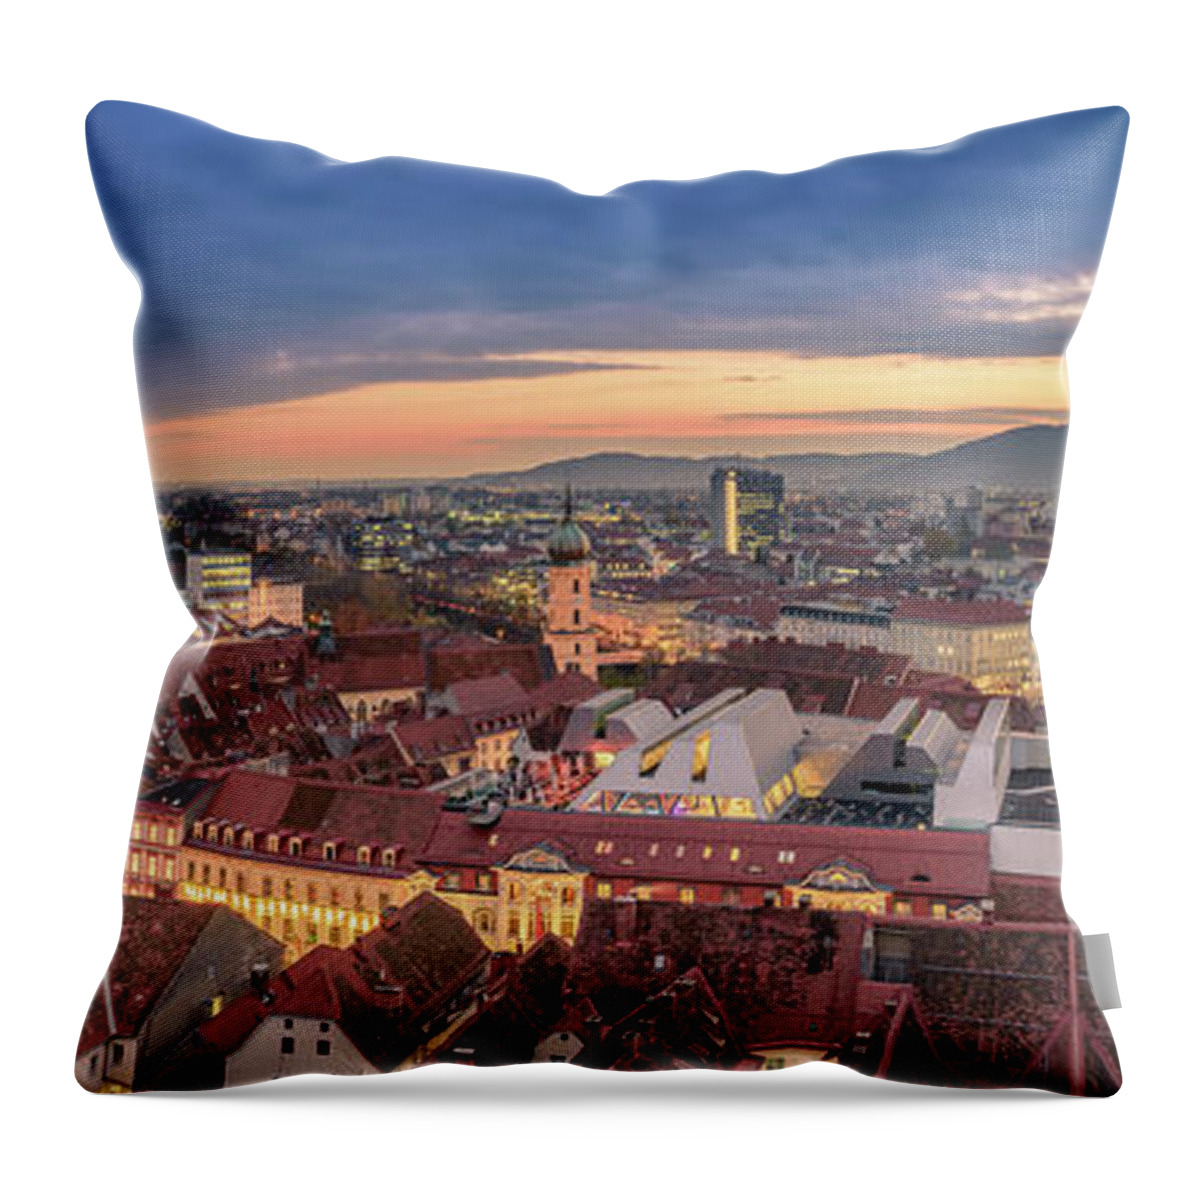 Graz Throw Pillow featuring the photograph Graz by Fink Andreas